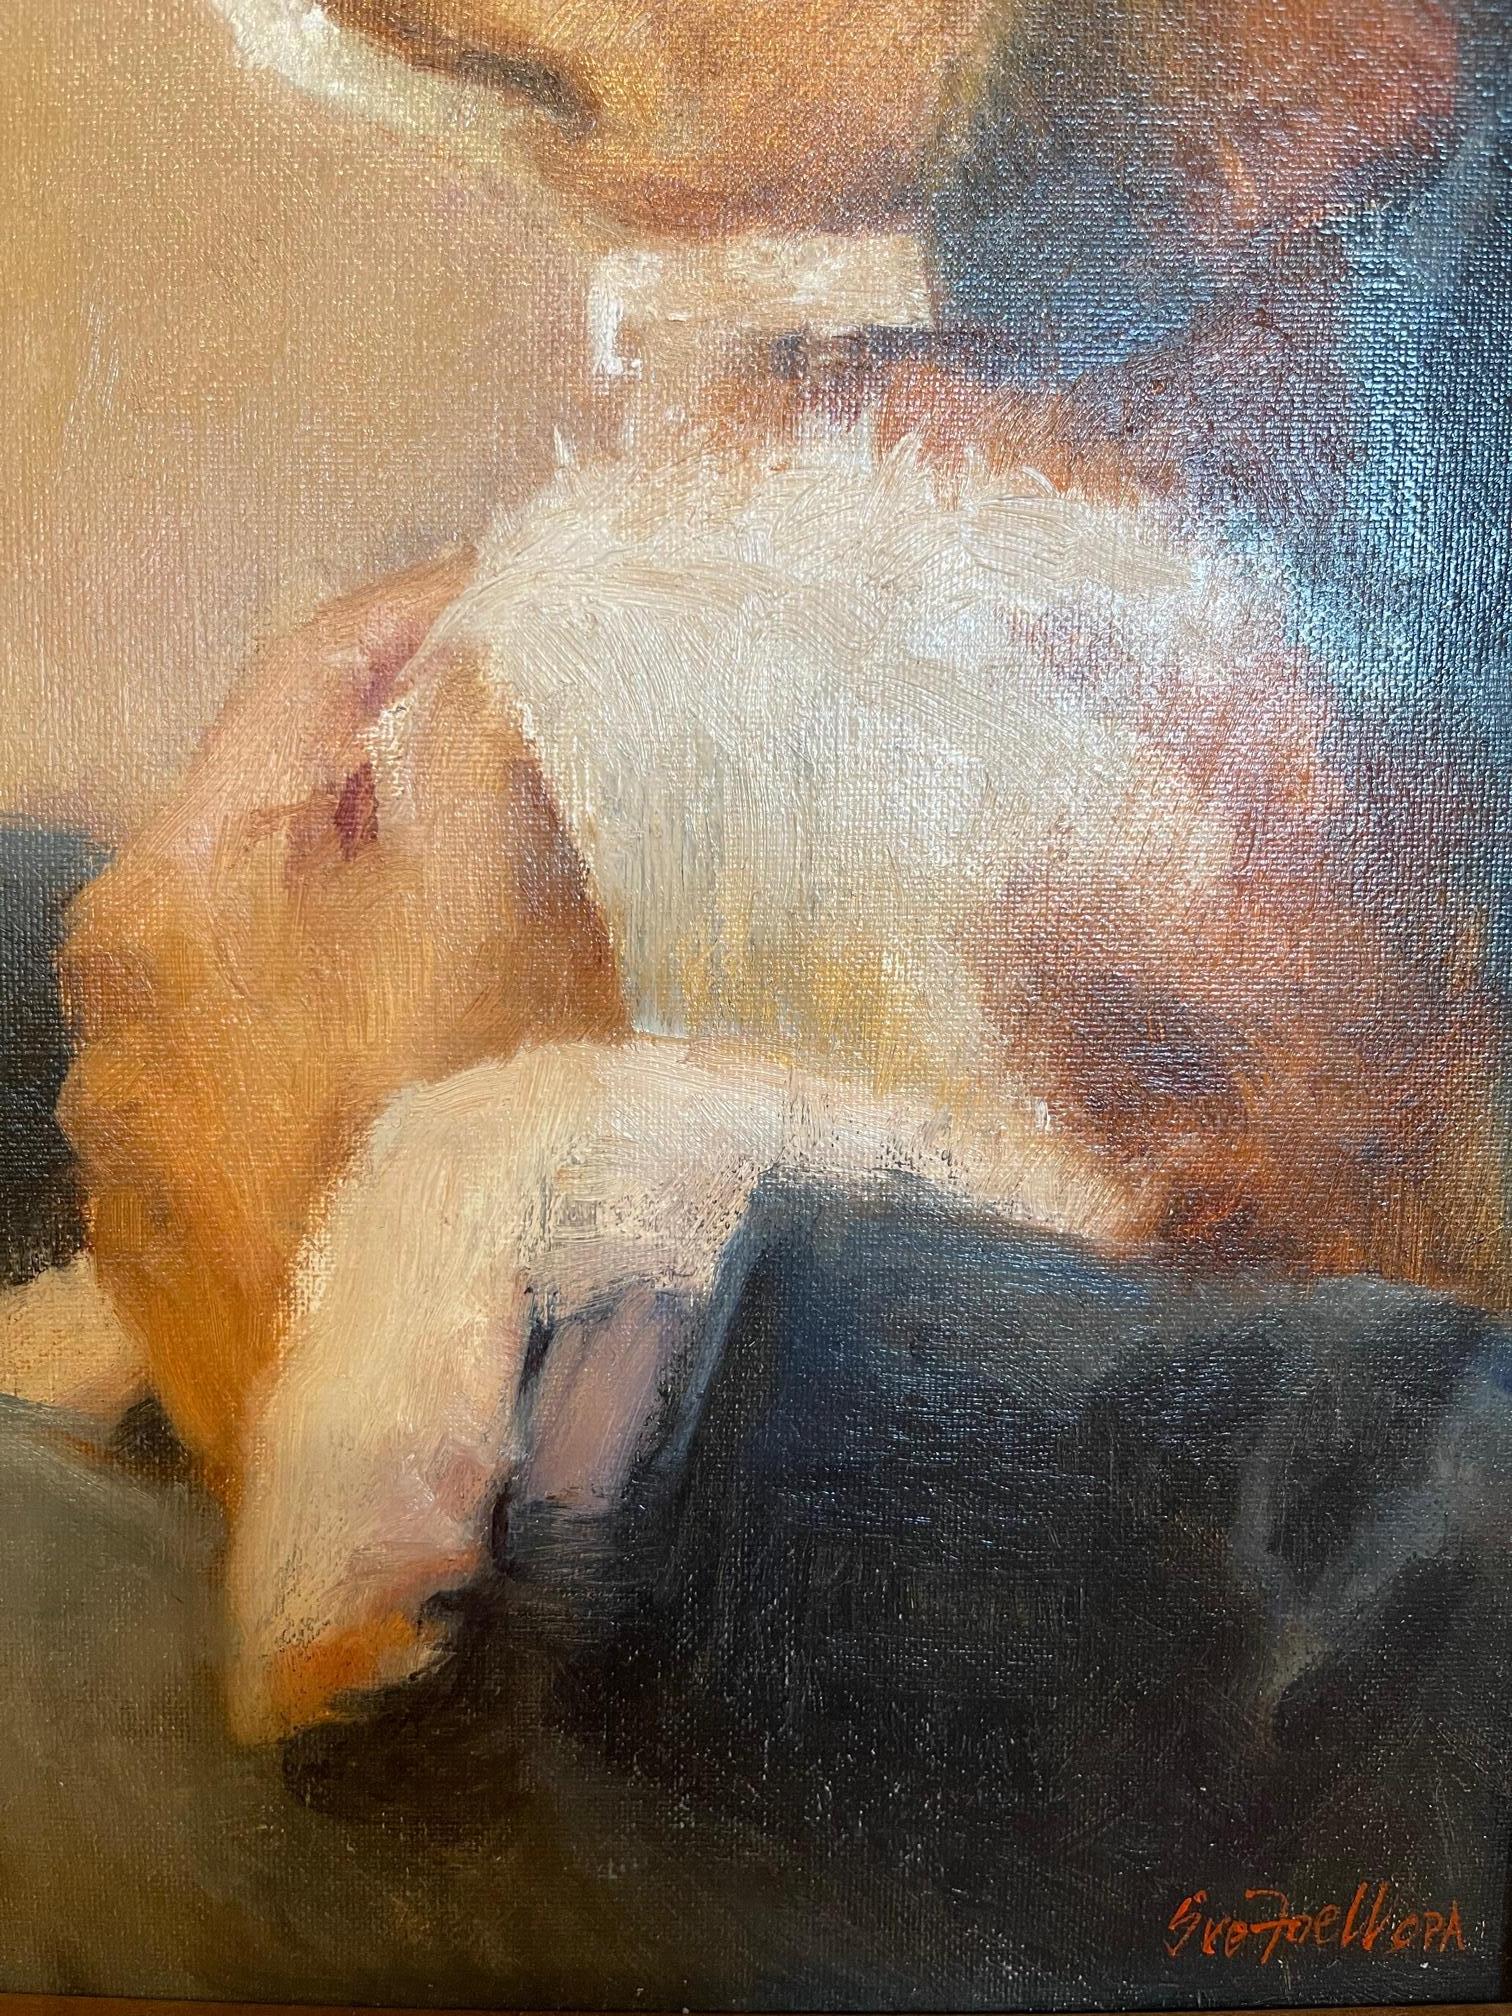 Oil on Canvas 